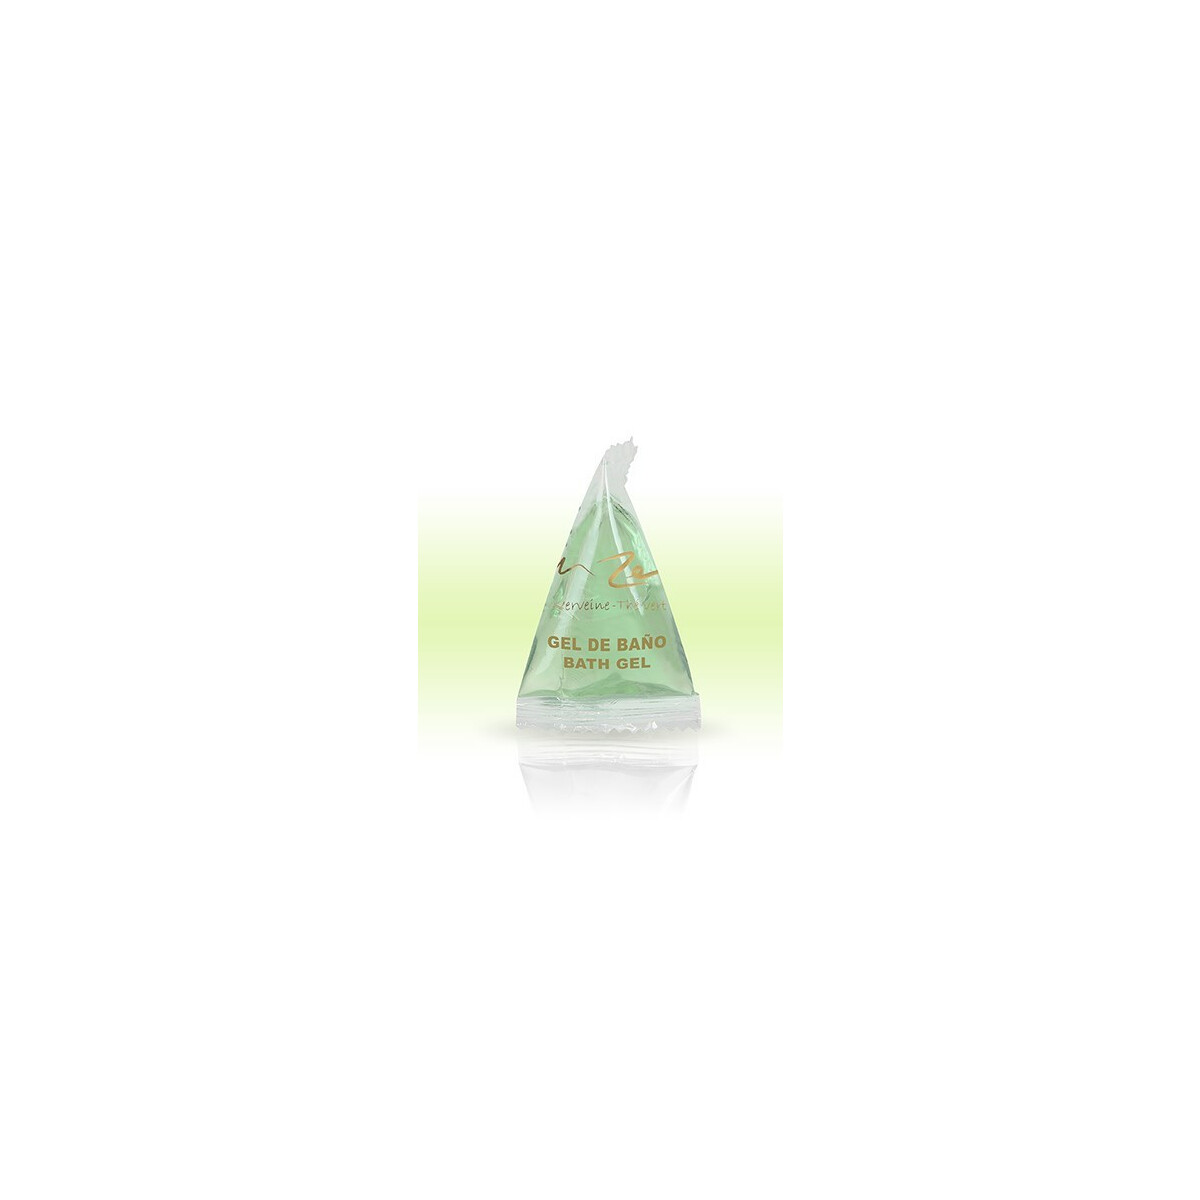 Duschgel im Pyramiden-Sachet 15ml